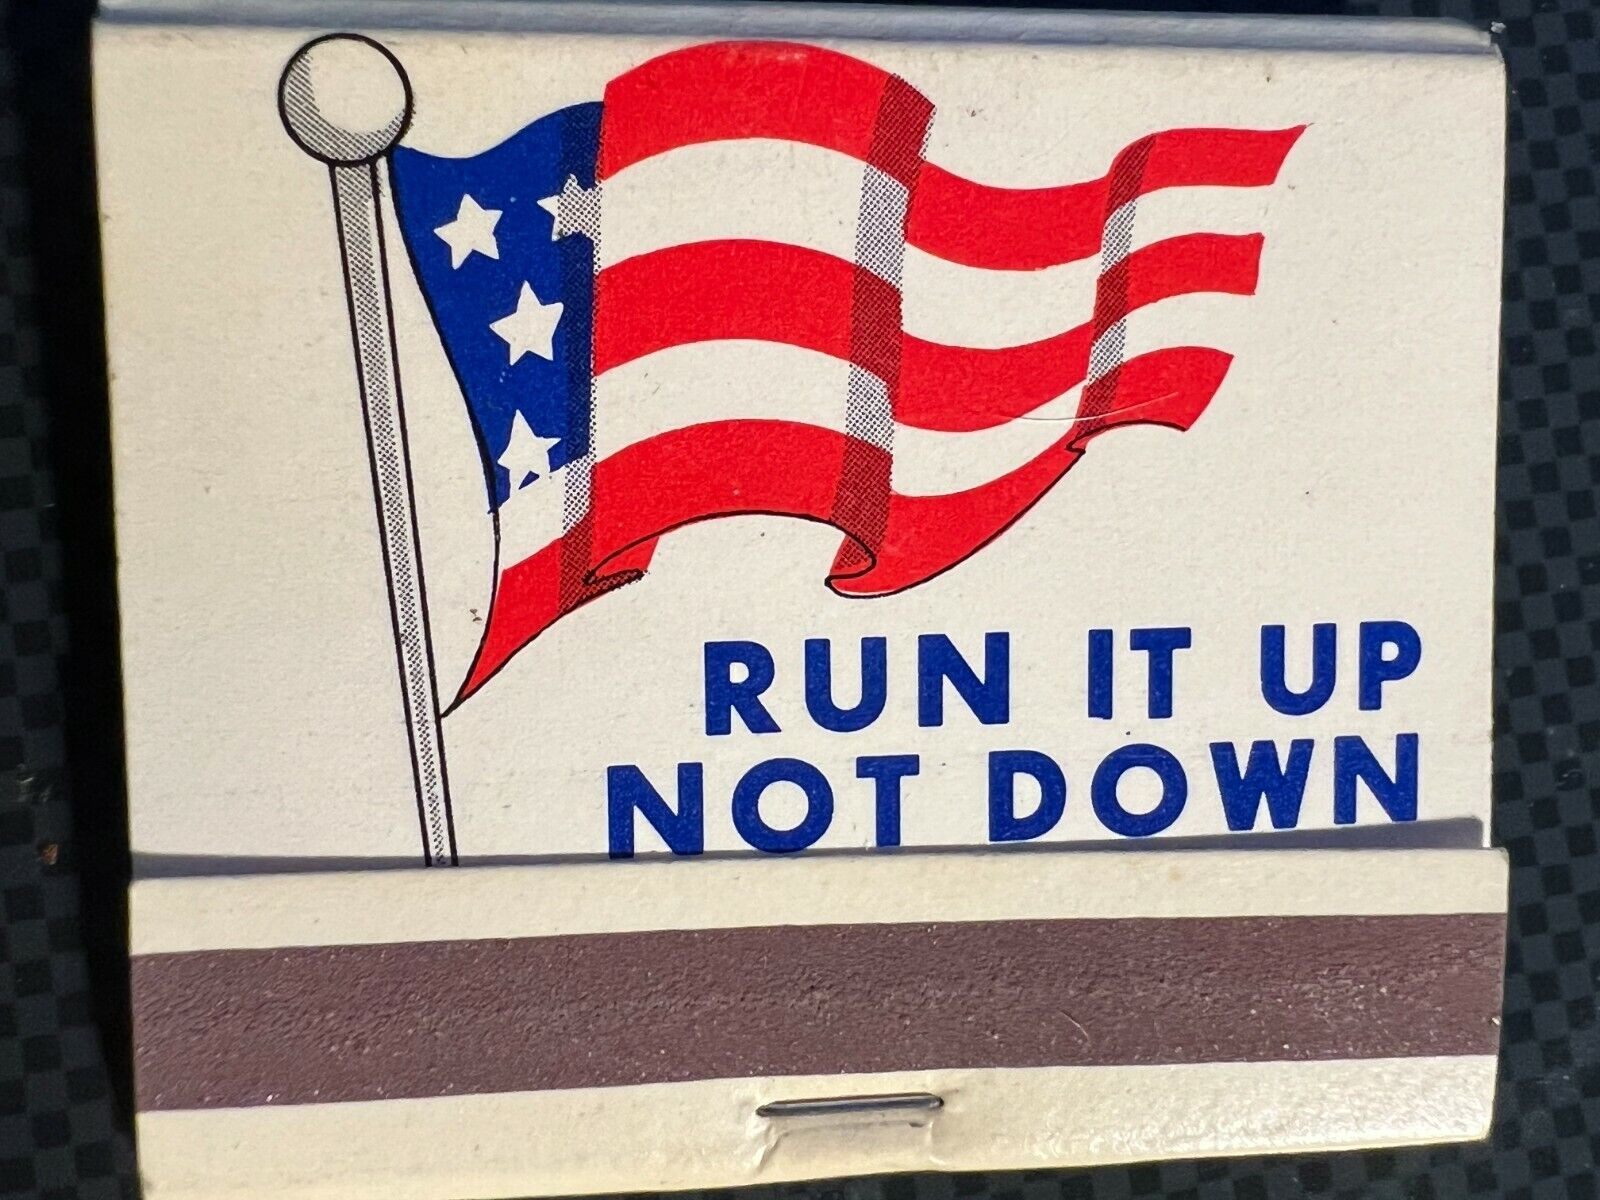 VINTAGE MATCHBOOK - AMERICAN FLAG - RUN IT UP NOT DOWN - UNSTRUCK BEAUTY